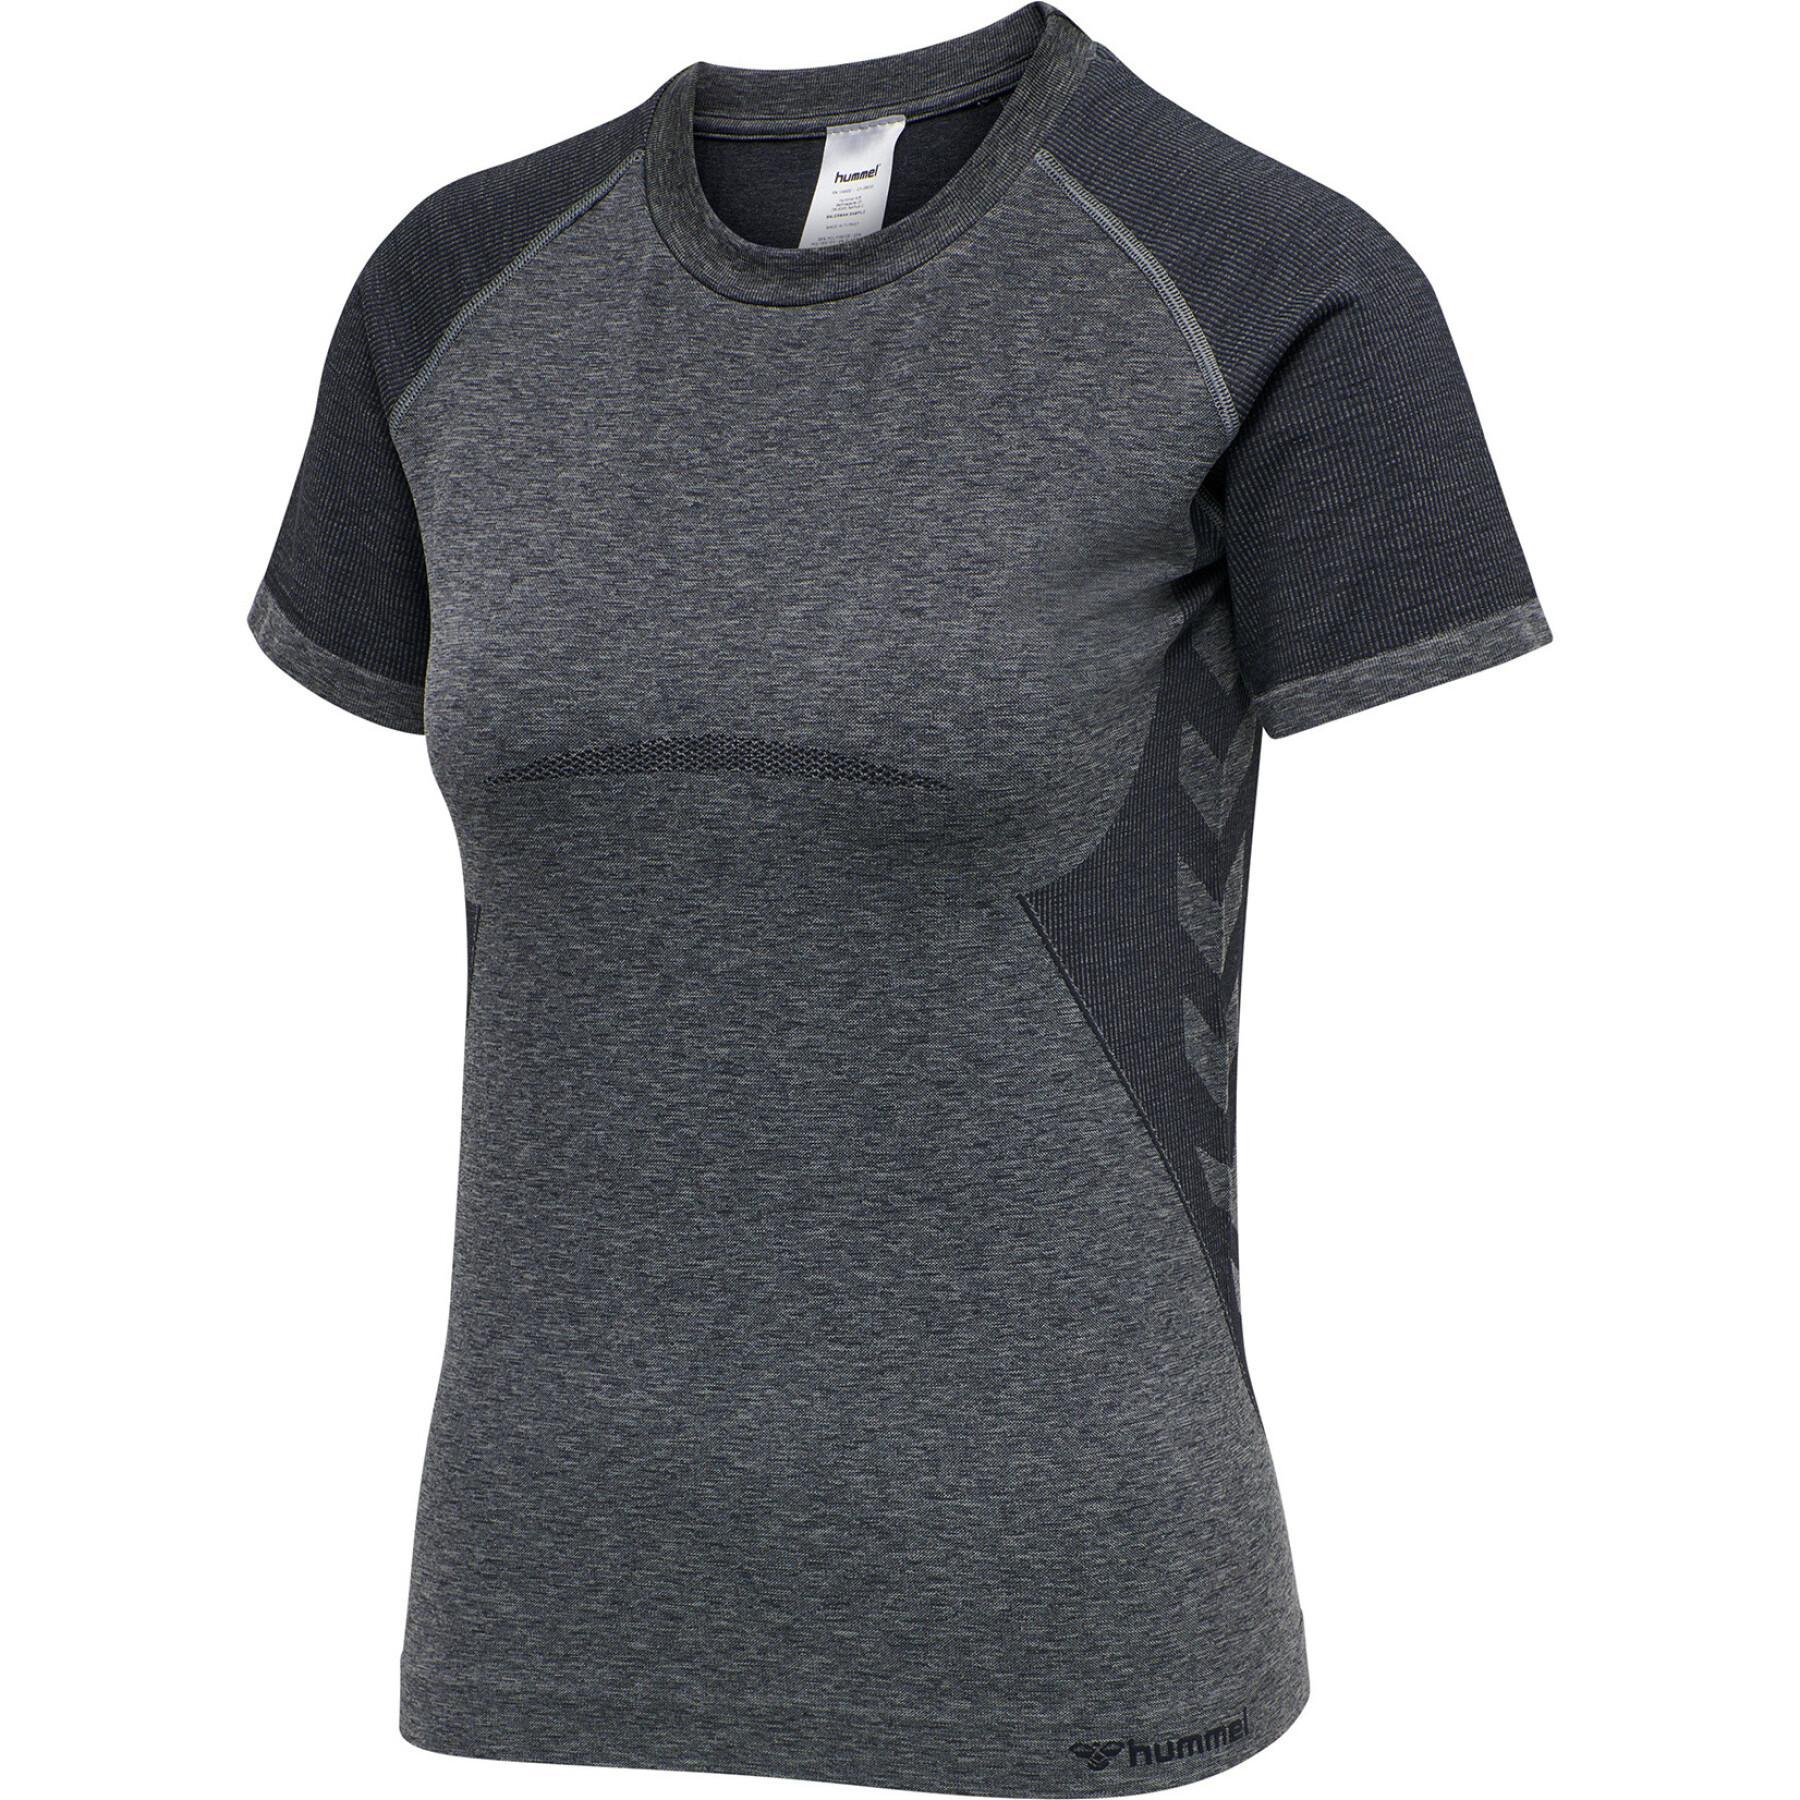 Women's T-shirt Hummel hmlcoco seamless